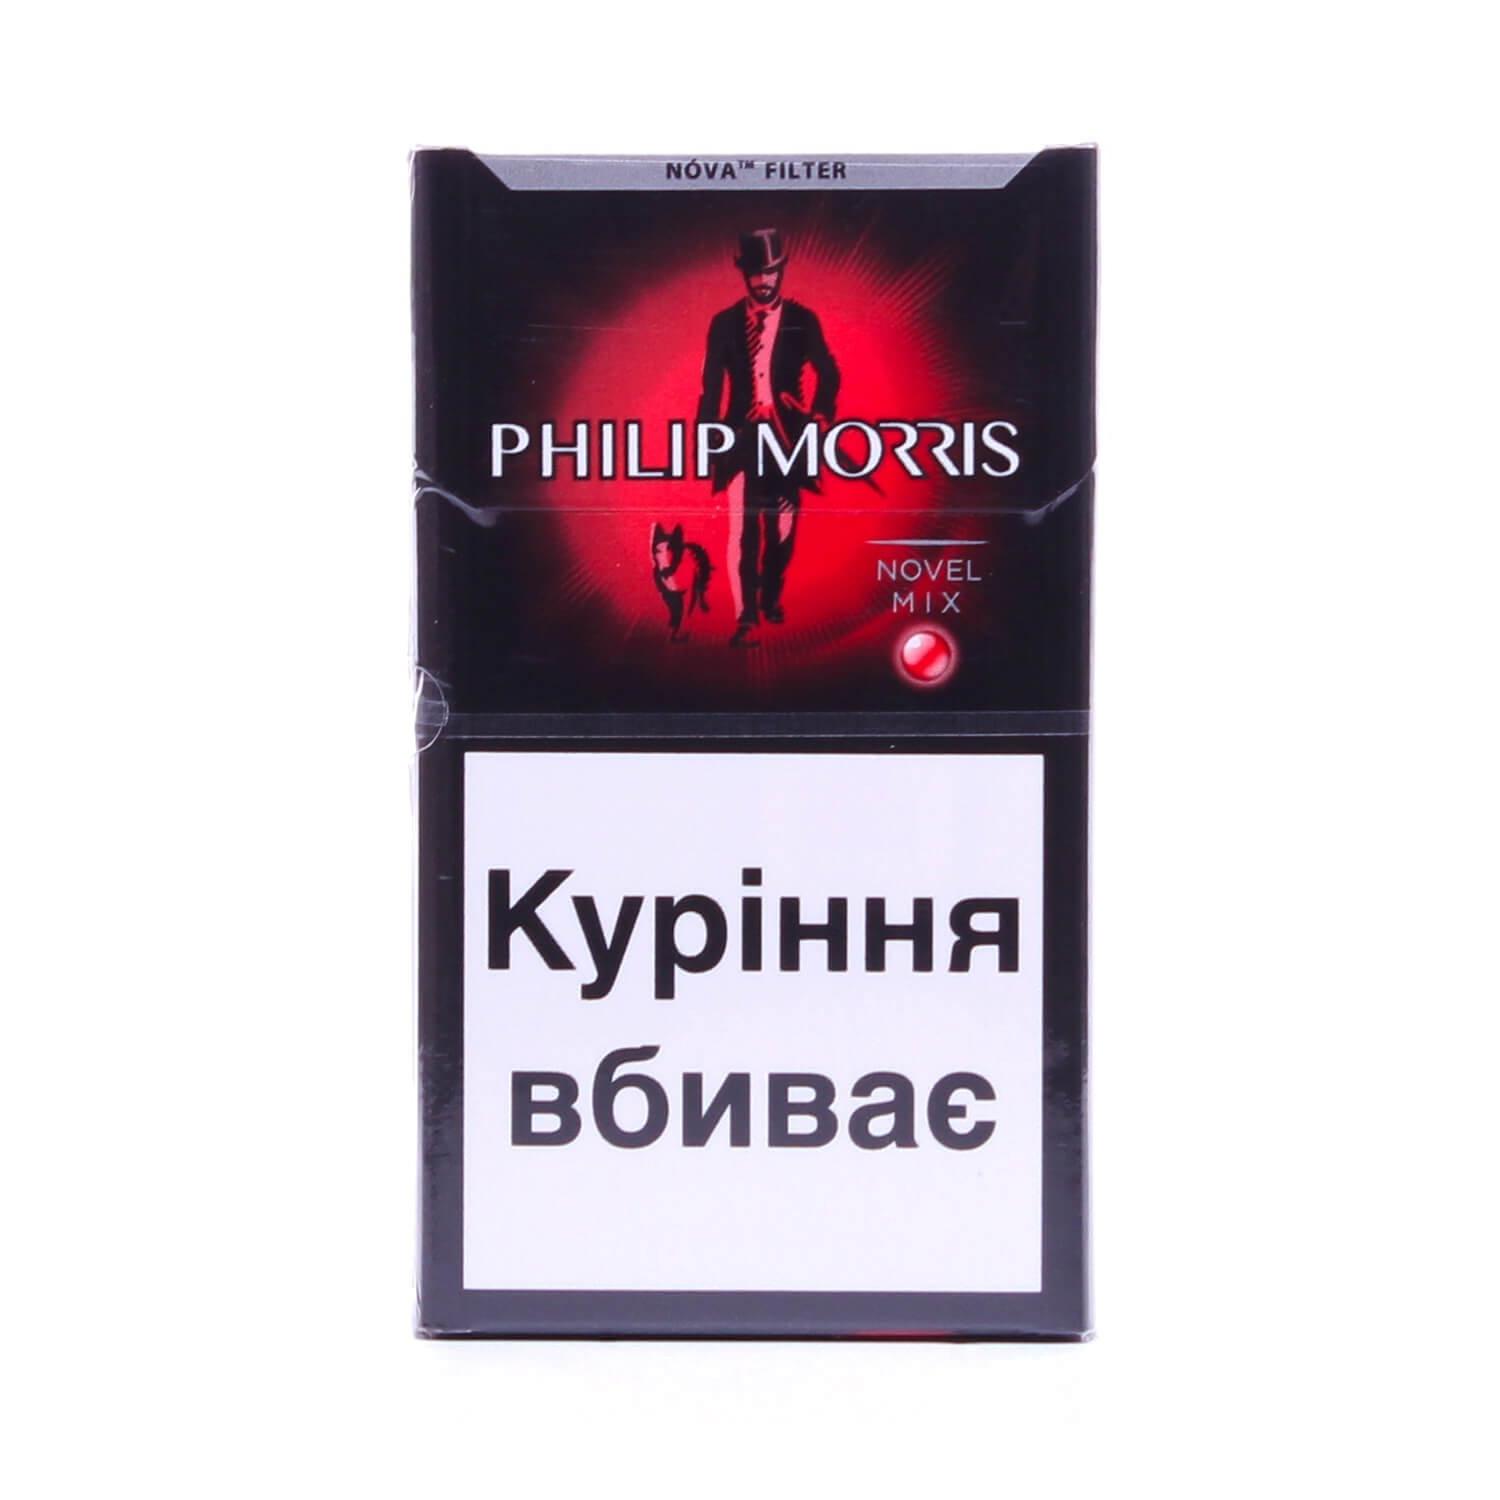 Сигареты филип моррис с кнопкой цена. Philip Morris Compact Premium. Philip Morris Compact Premium Mix. Сигареты Филип Моррис с кнопкой. Сигареты филим Морисс компакт премиум ярк.